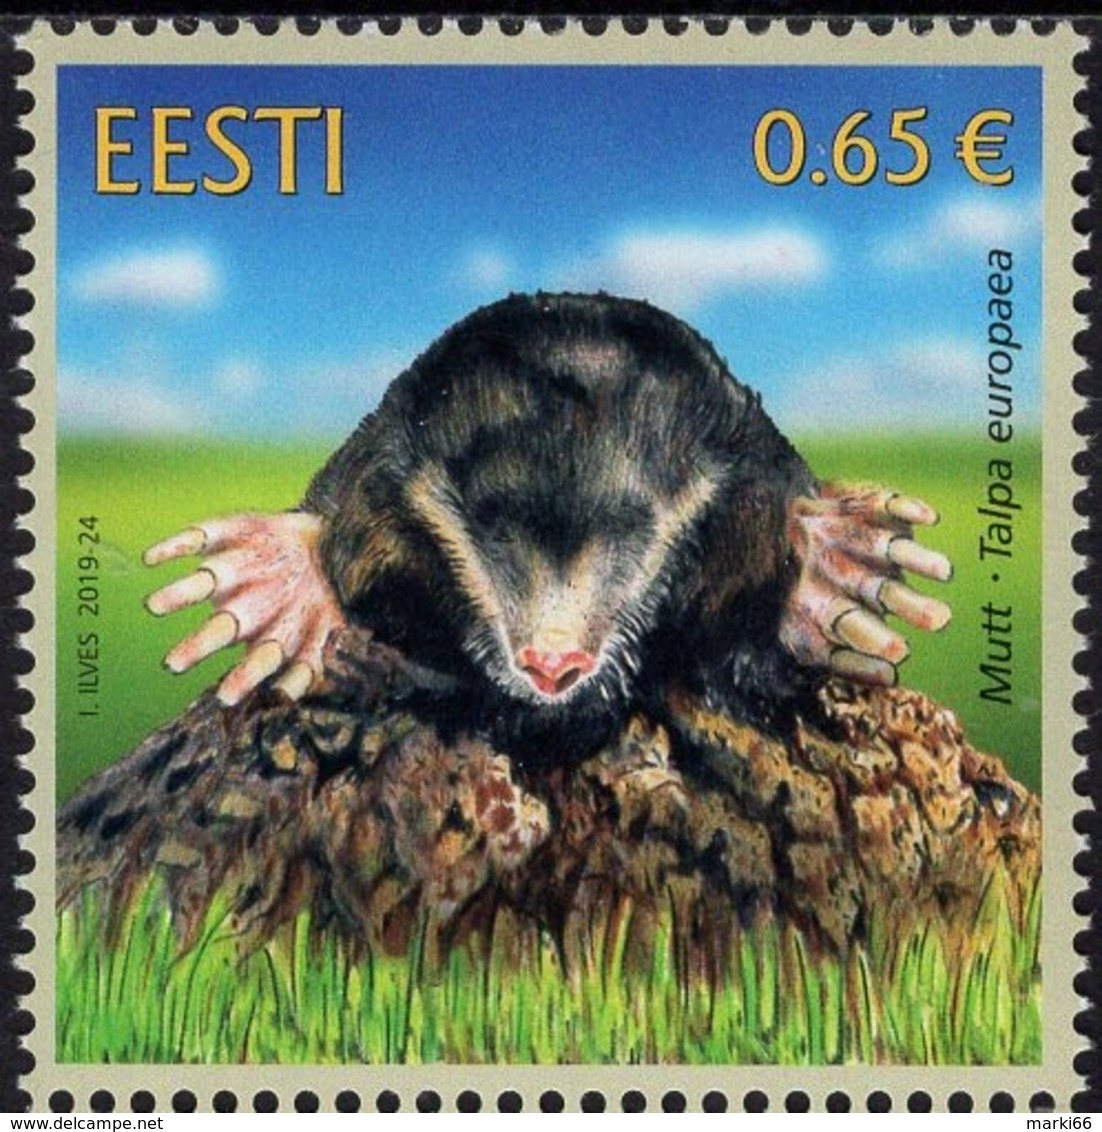 Estonia - 2019 - Estonian Fauna - The Mole - Mint Stamp - Estonia